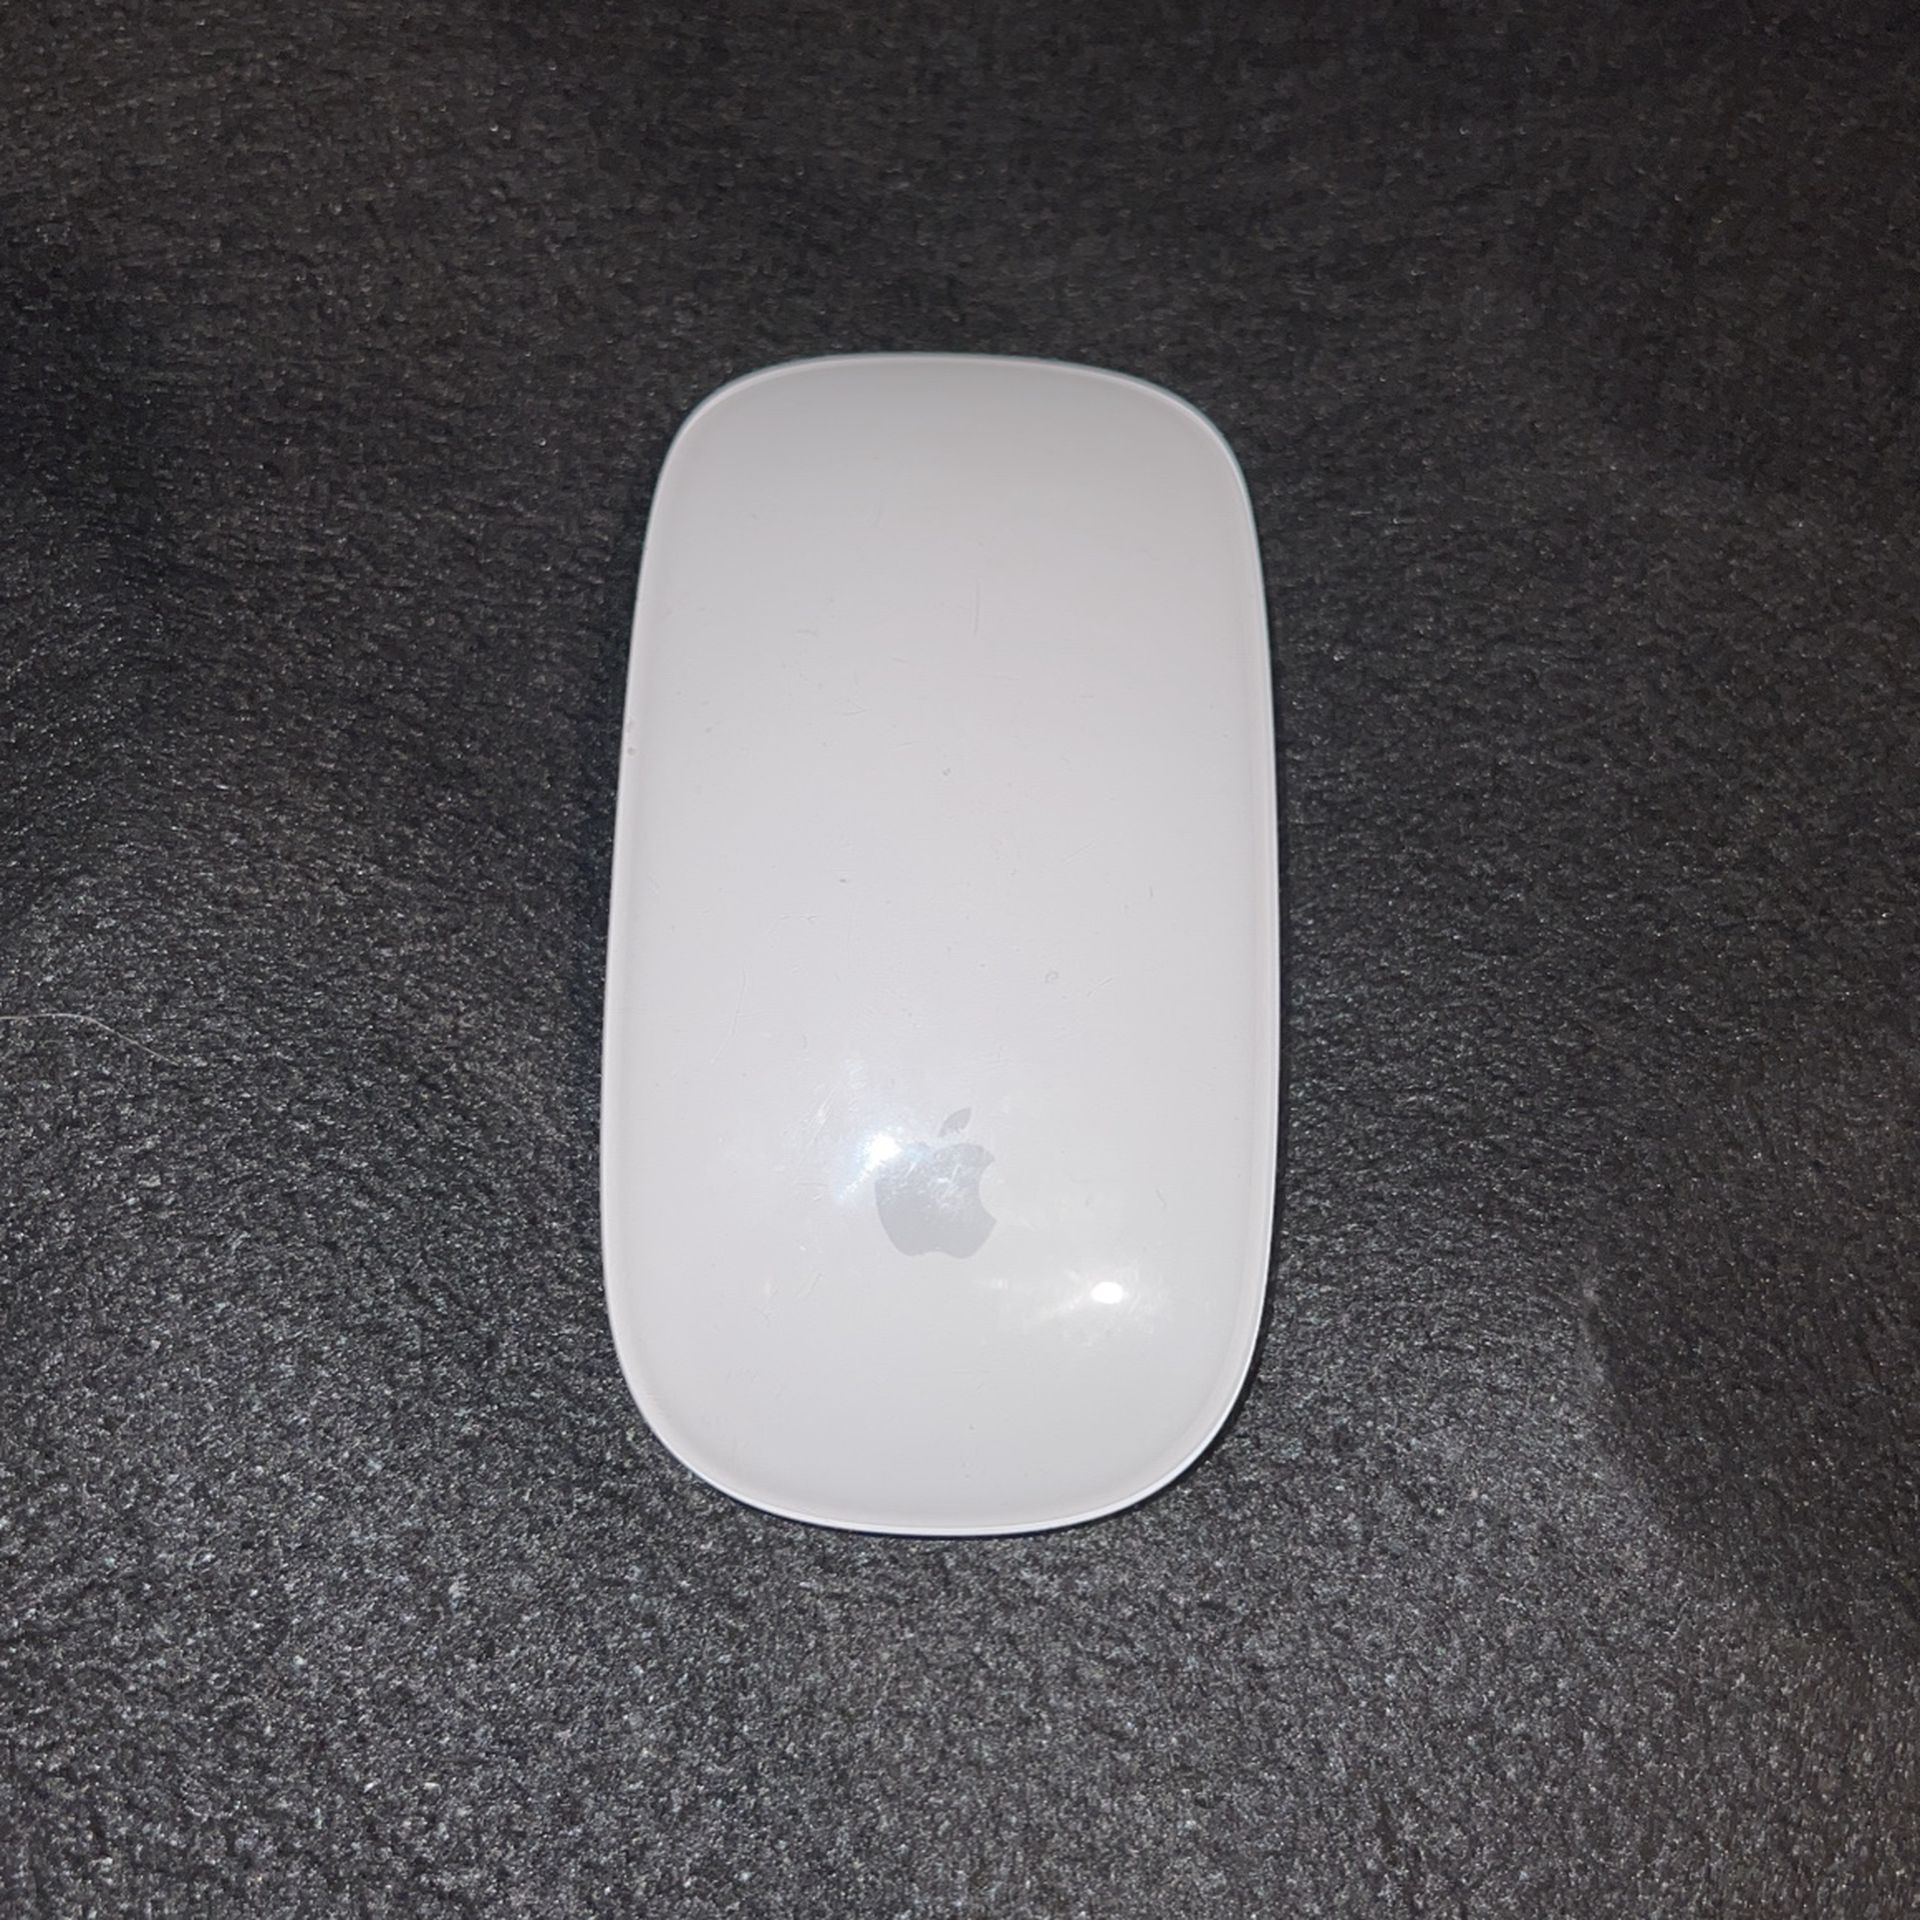 Apple Magic Wireless Mouse 